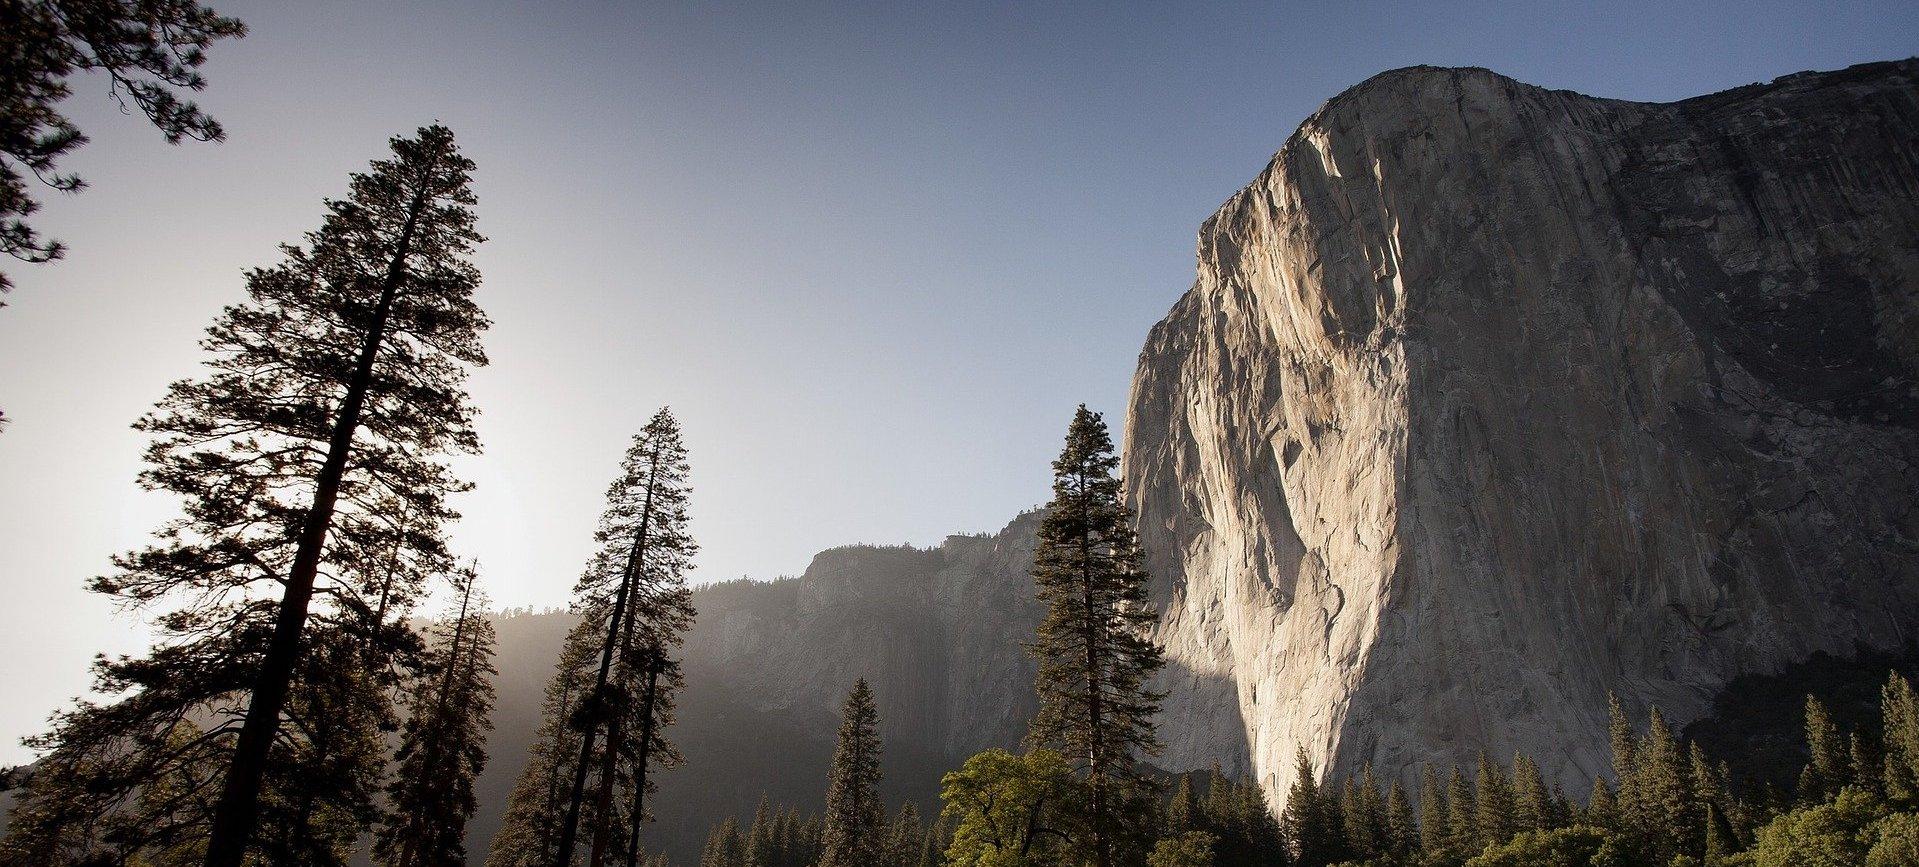 Photo of Yosemite half dome rock